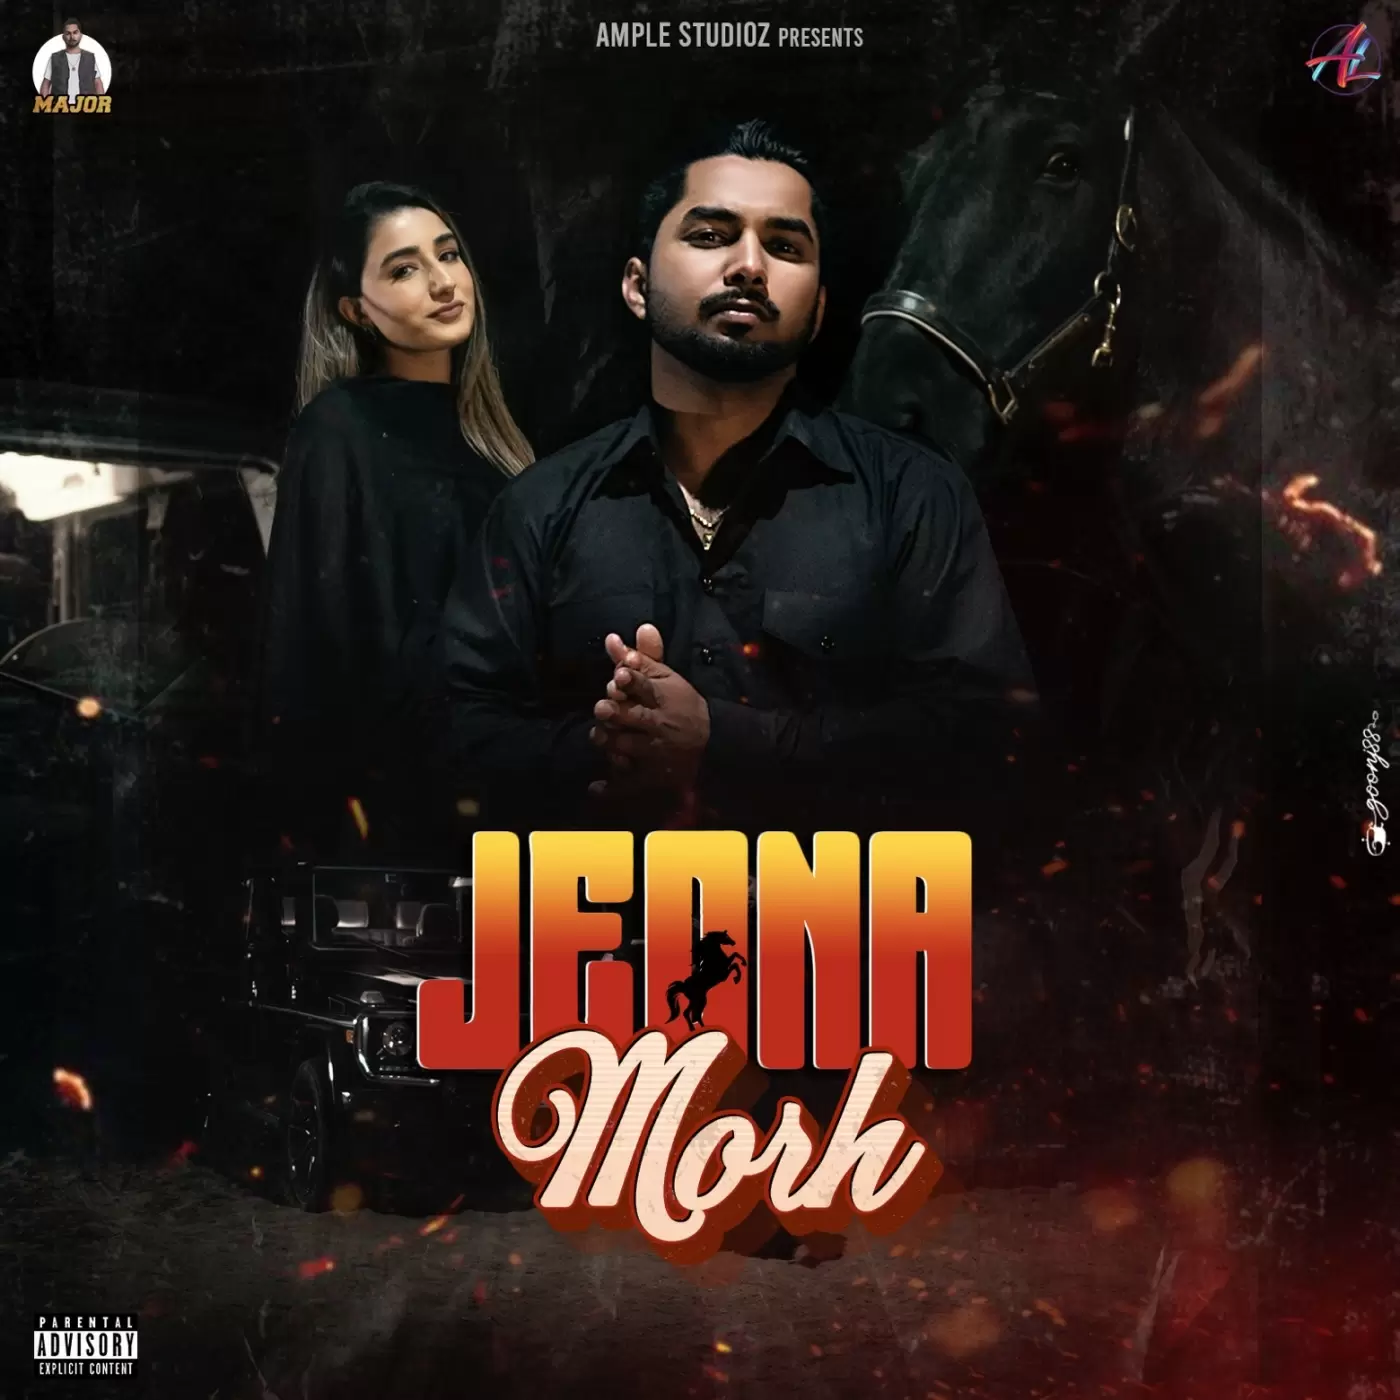 Jeona Morh Major Mp3 Download Song - Mr-Punjab